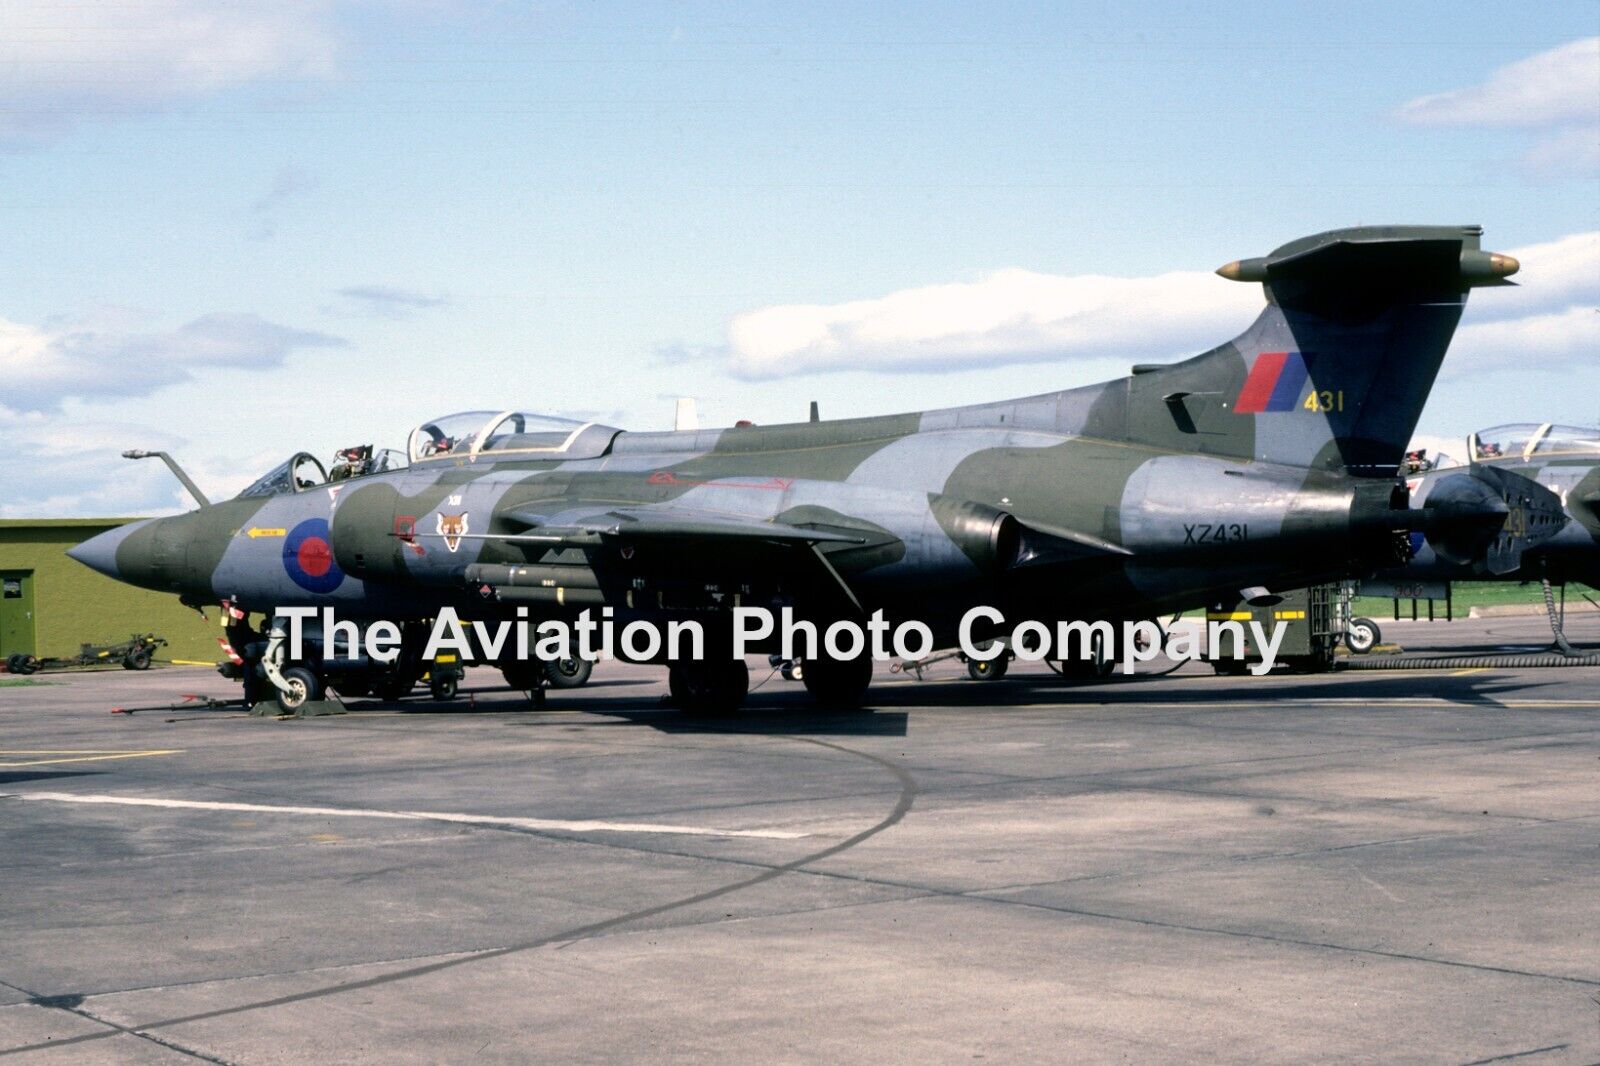 RAF 12 Squadron Blackburn Buccaneer S.2 XZ431 (1981) Photograph